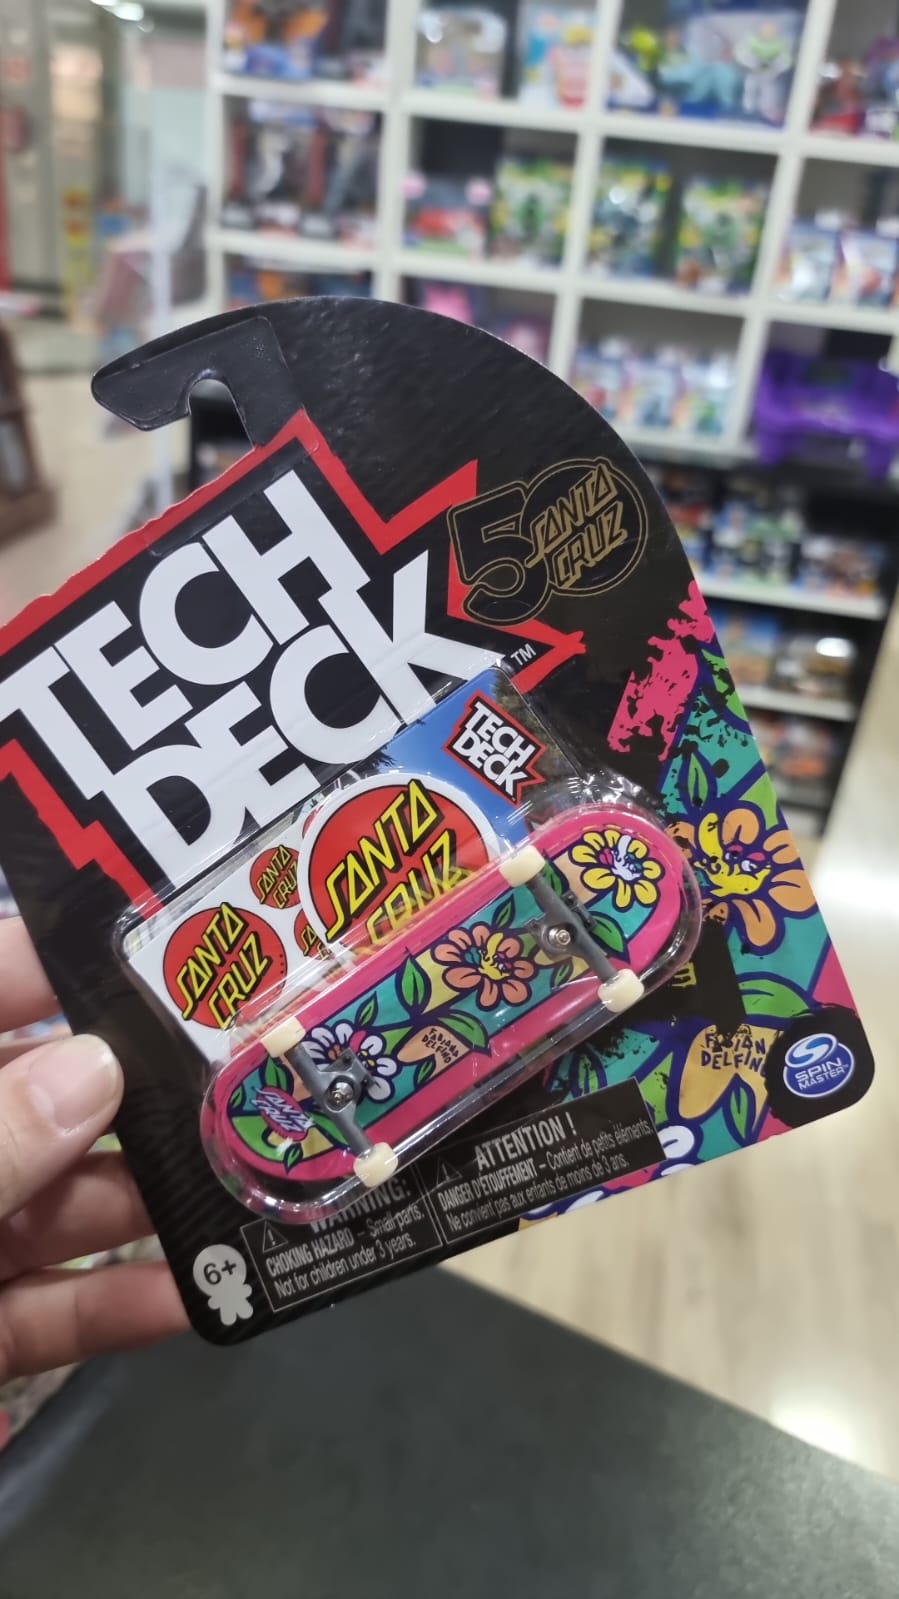 Tech Deck Skate De Dedo Profissional - Sunny 2890 - Ri Happy